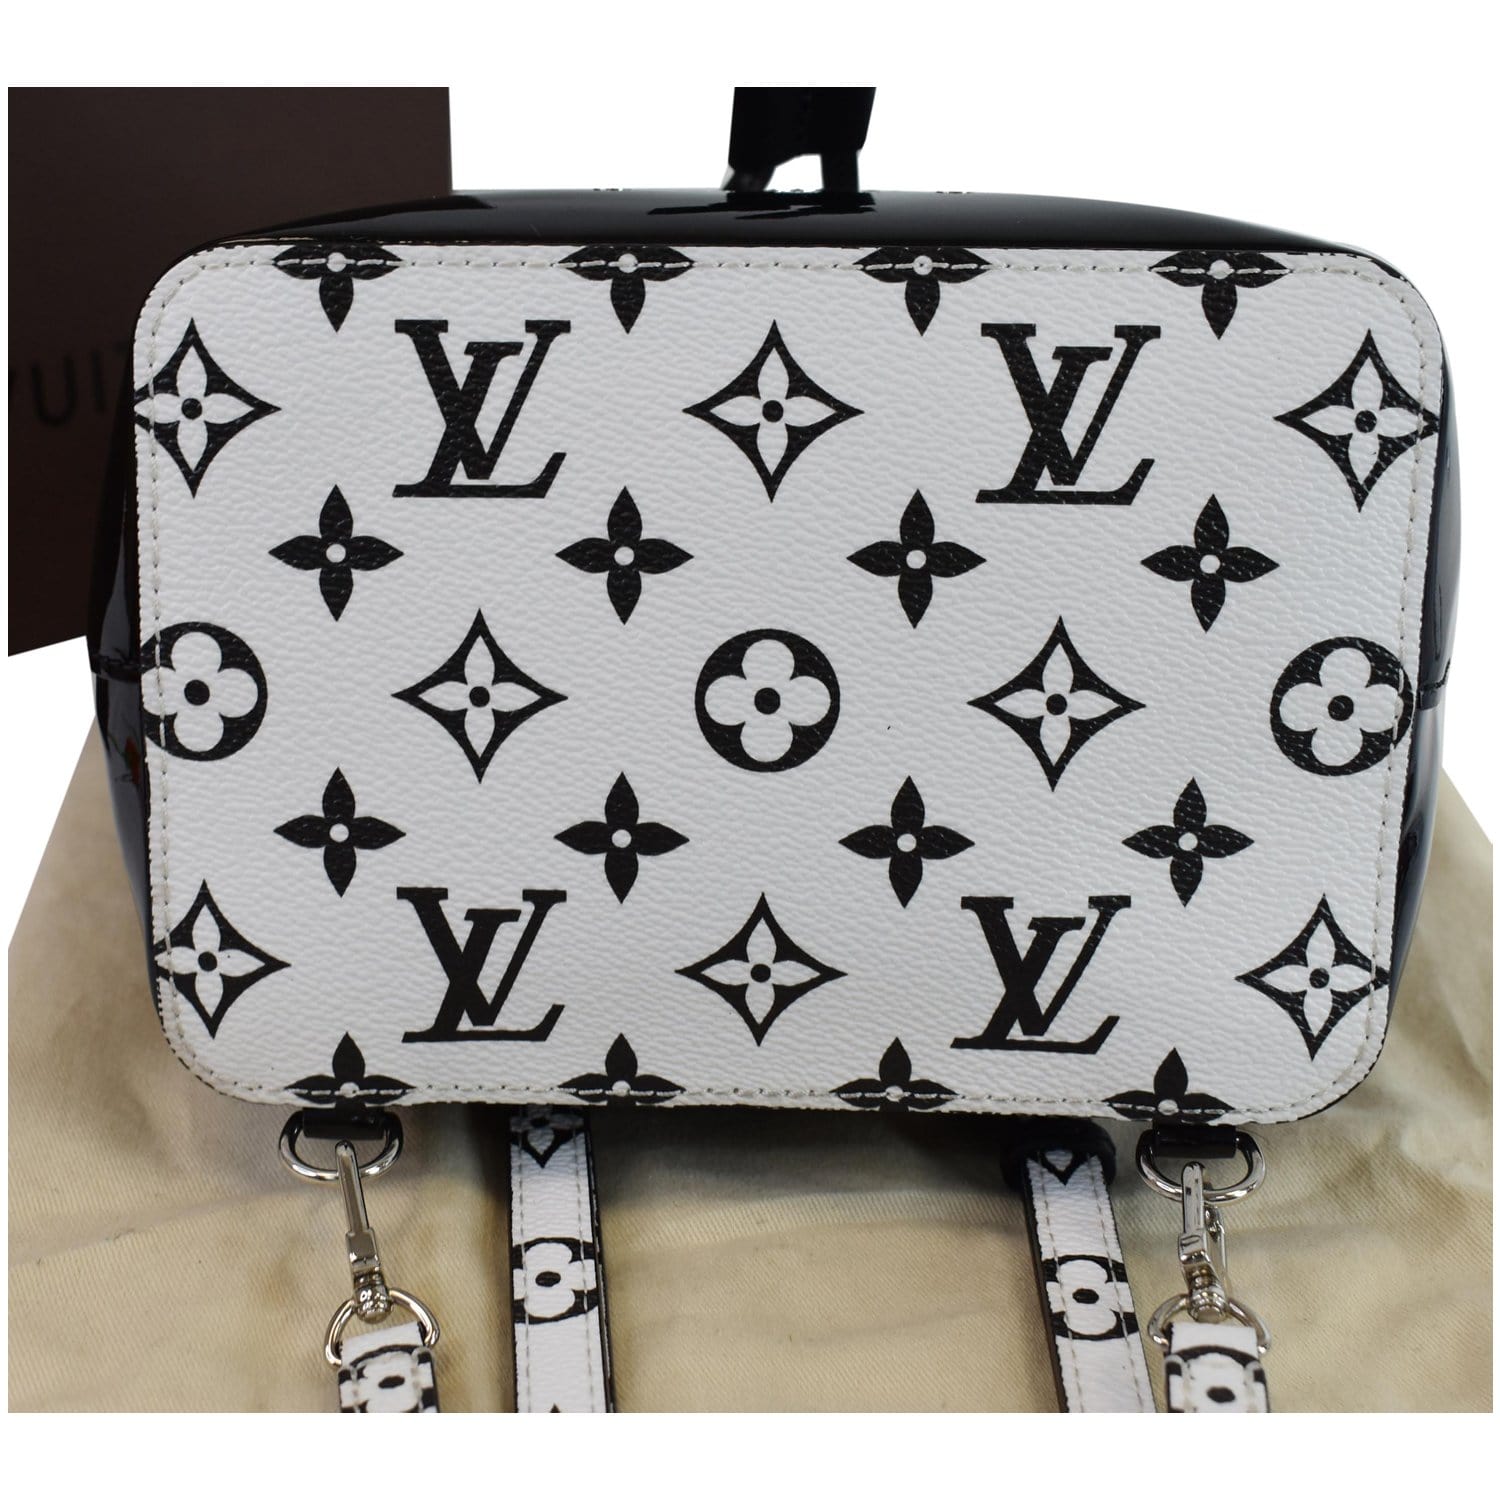 lv purse black and white